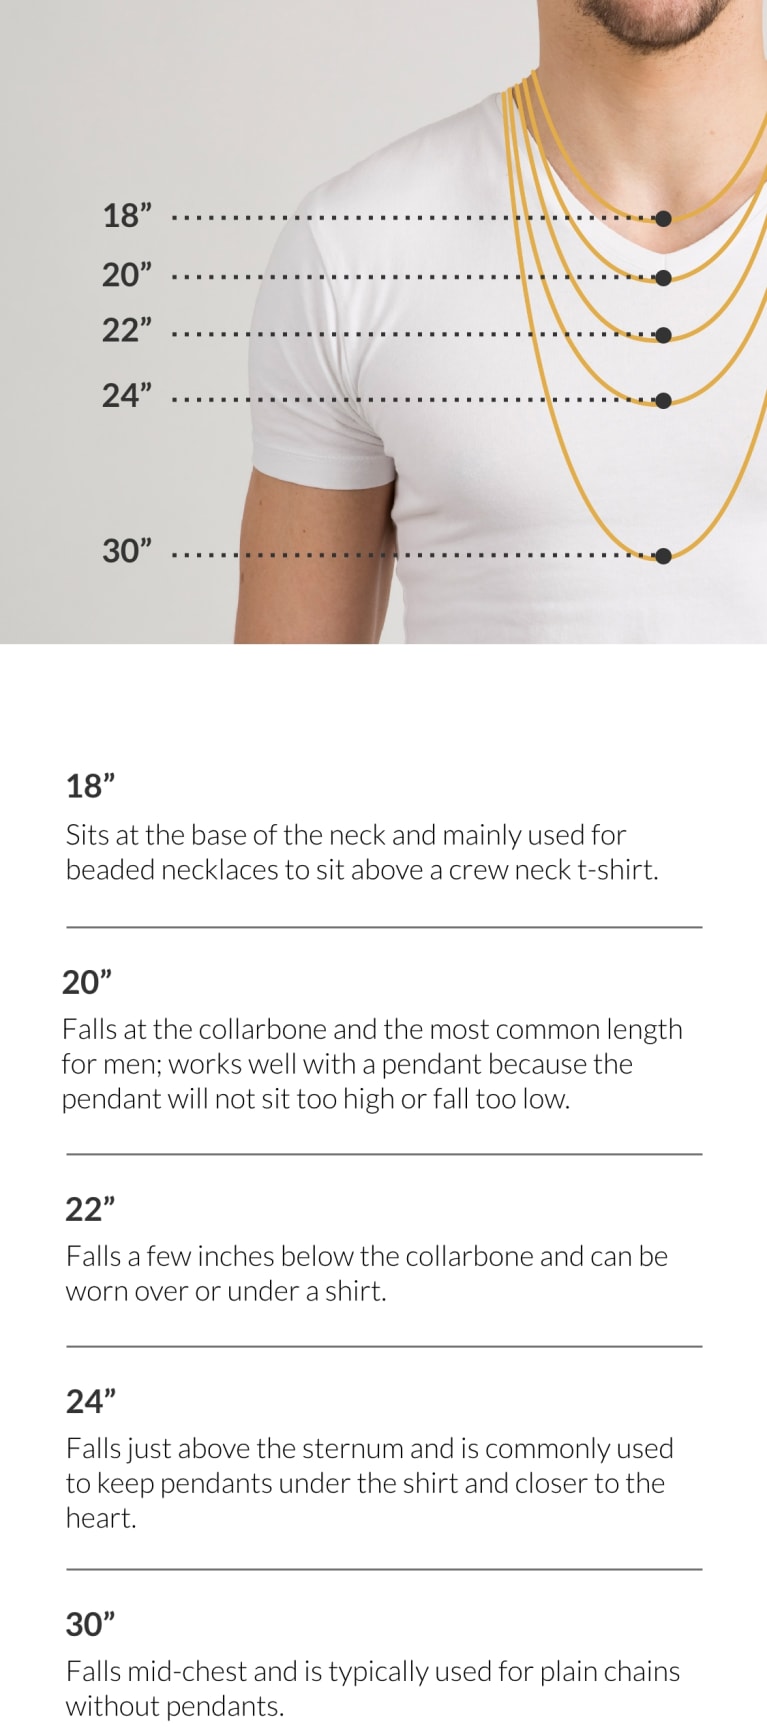 Men's Chain Necklaces Infographic